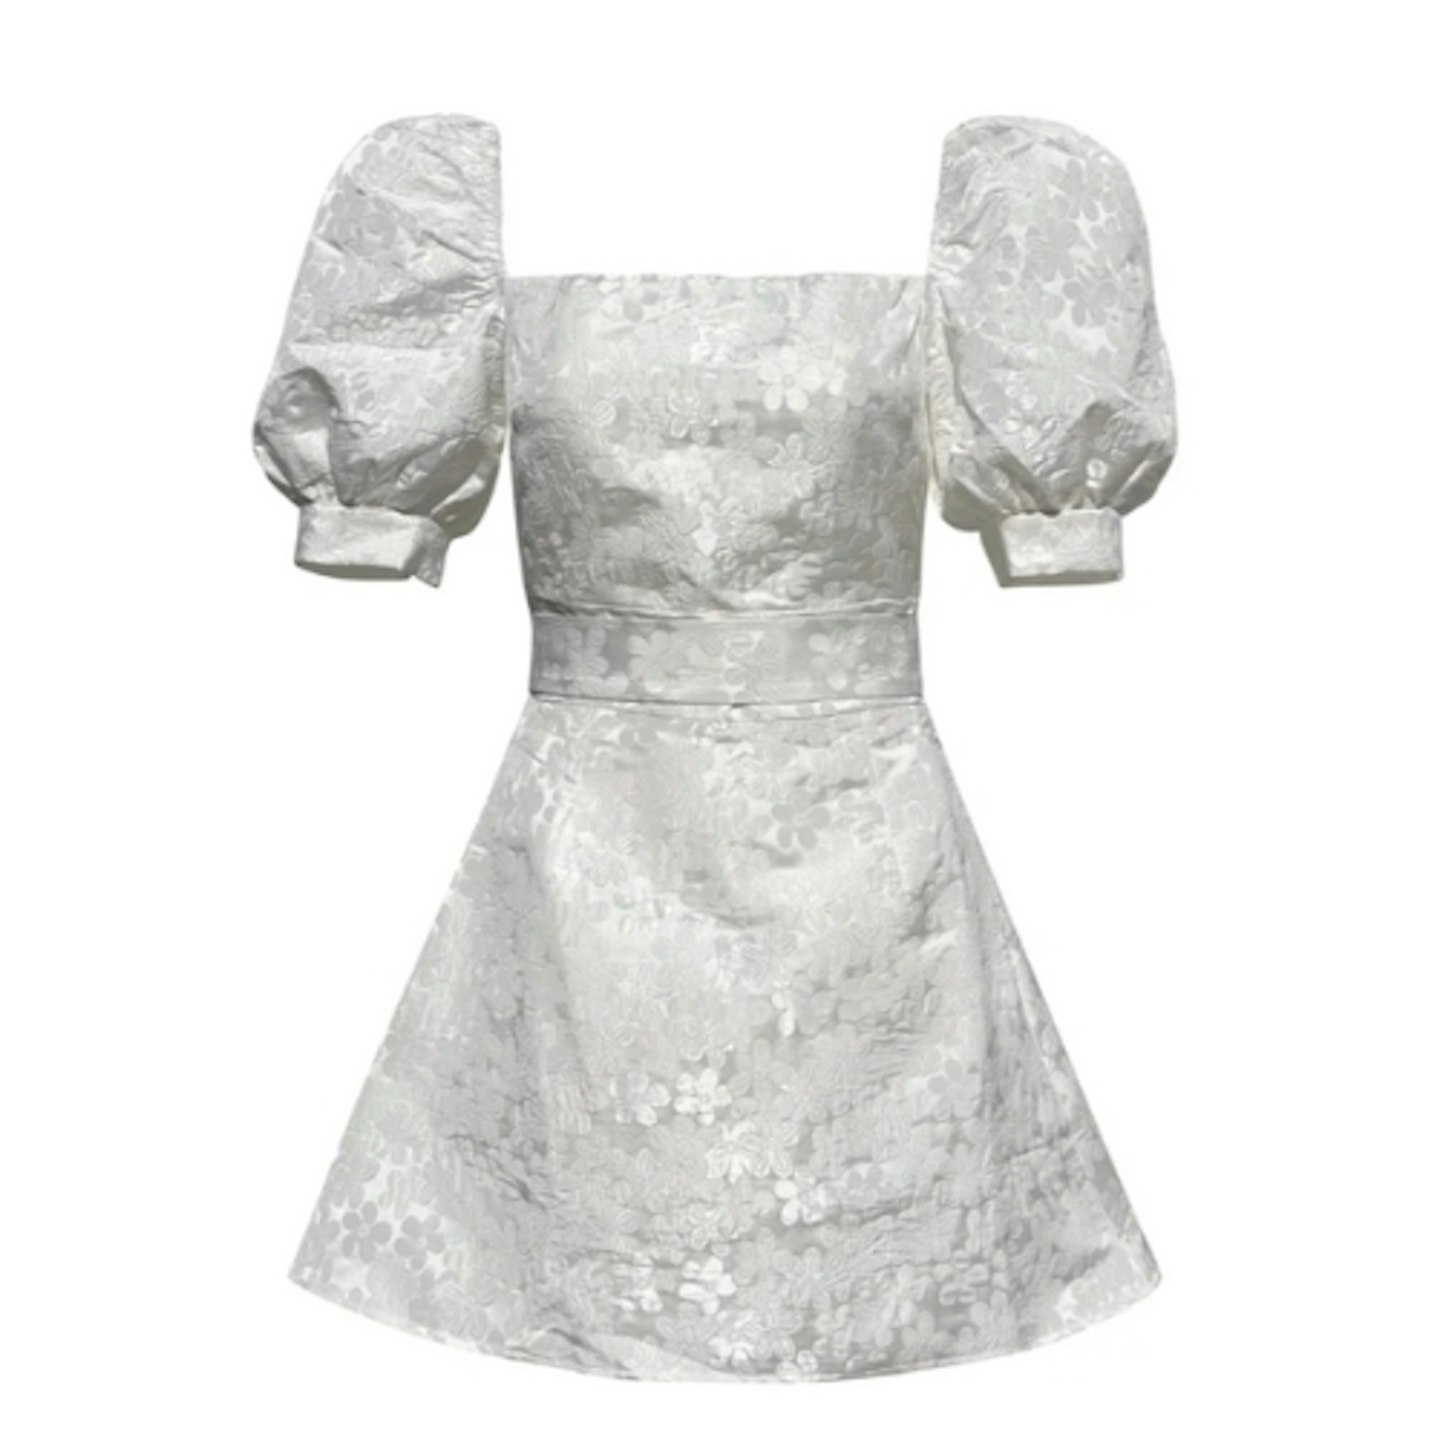 A Mini Wedding Dress - White